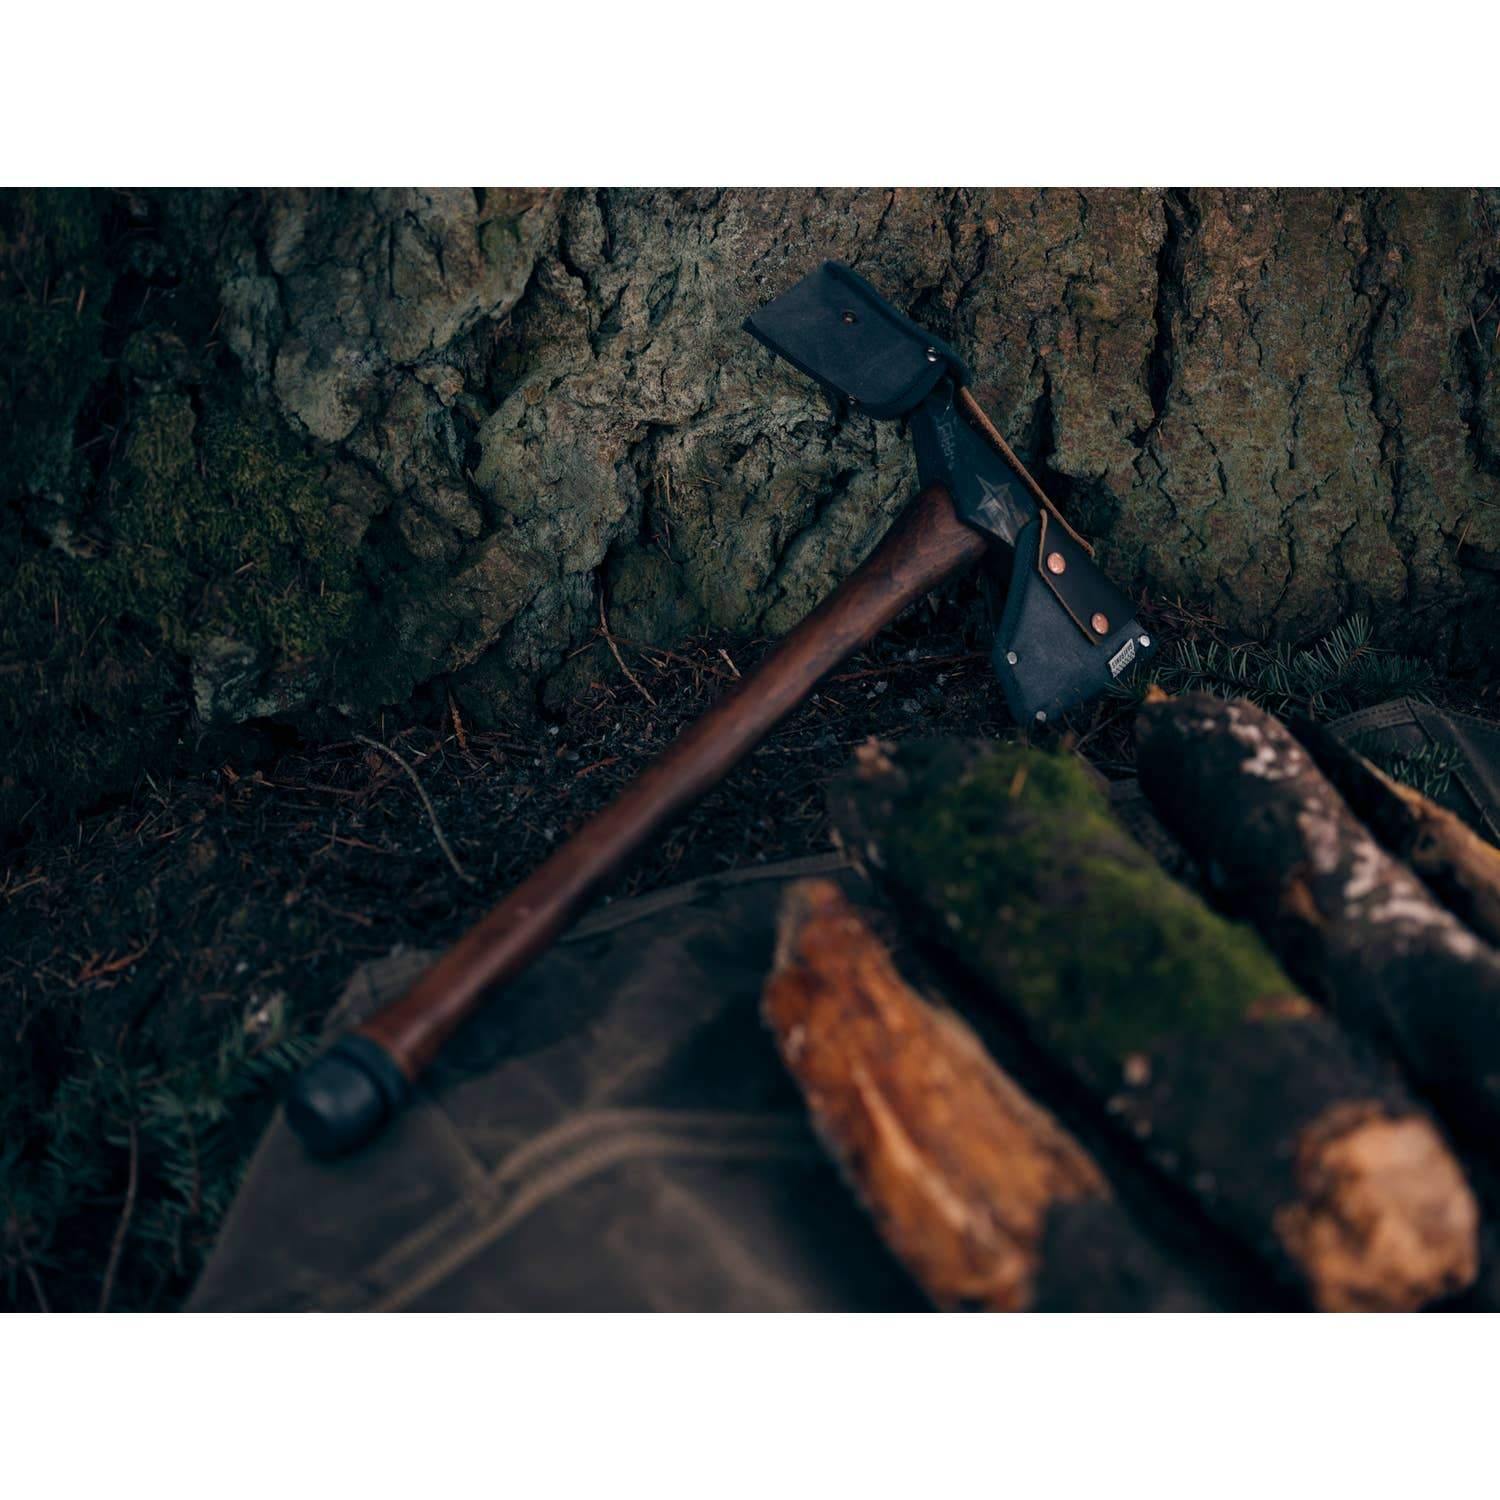 Barebones | Pulaski Axe with  Wooden Handle & Canvas Sheath, Axes, Barebones, Defiance Outdoor Gear Co.